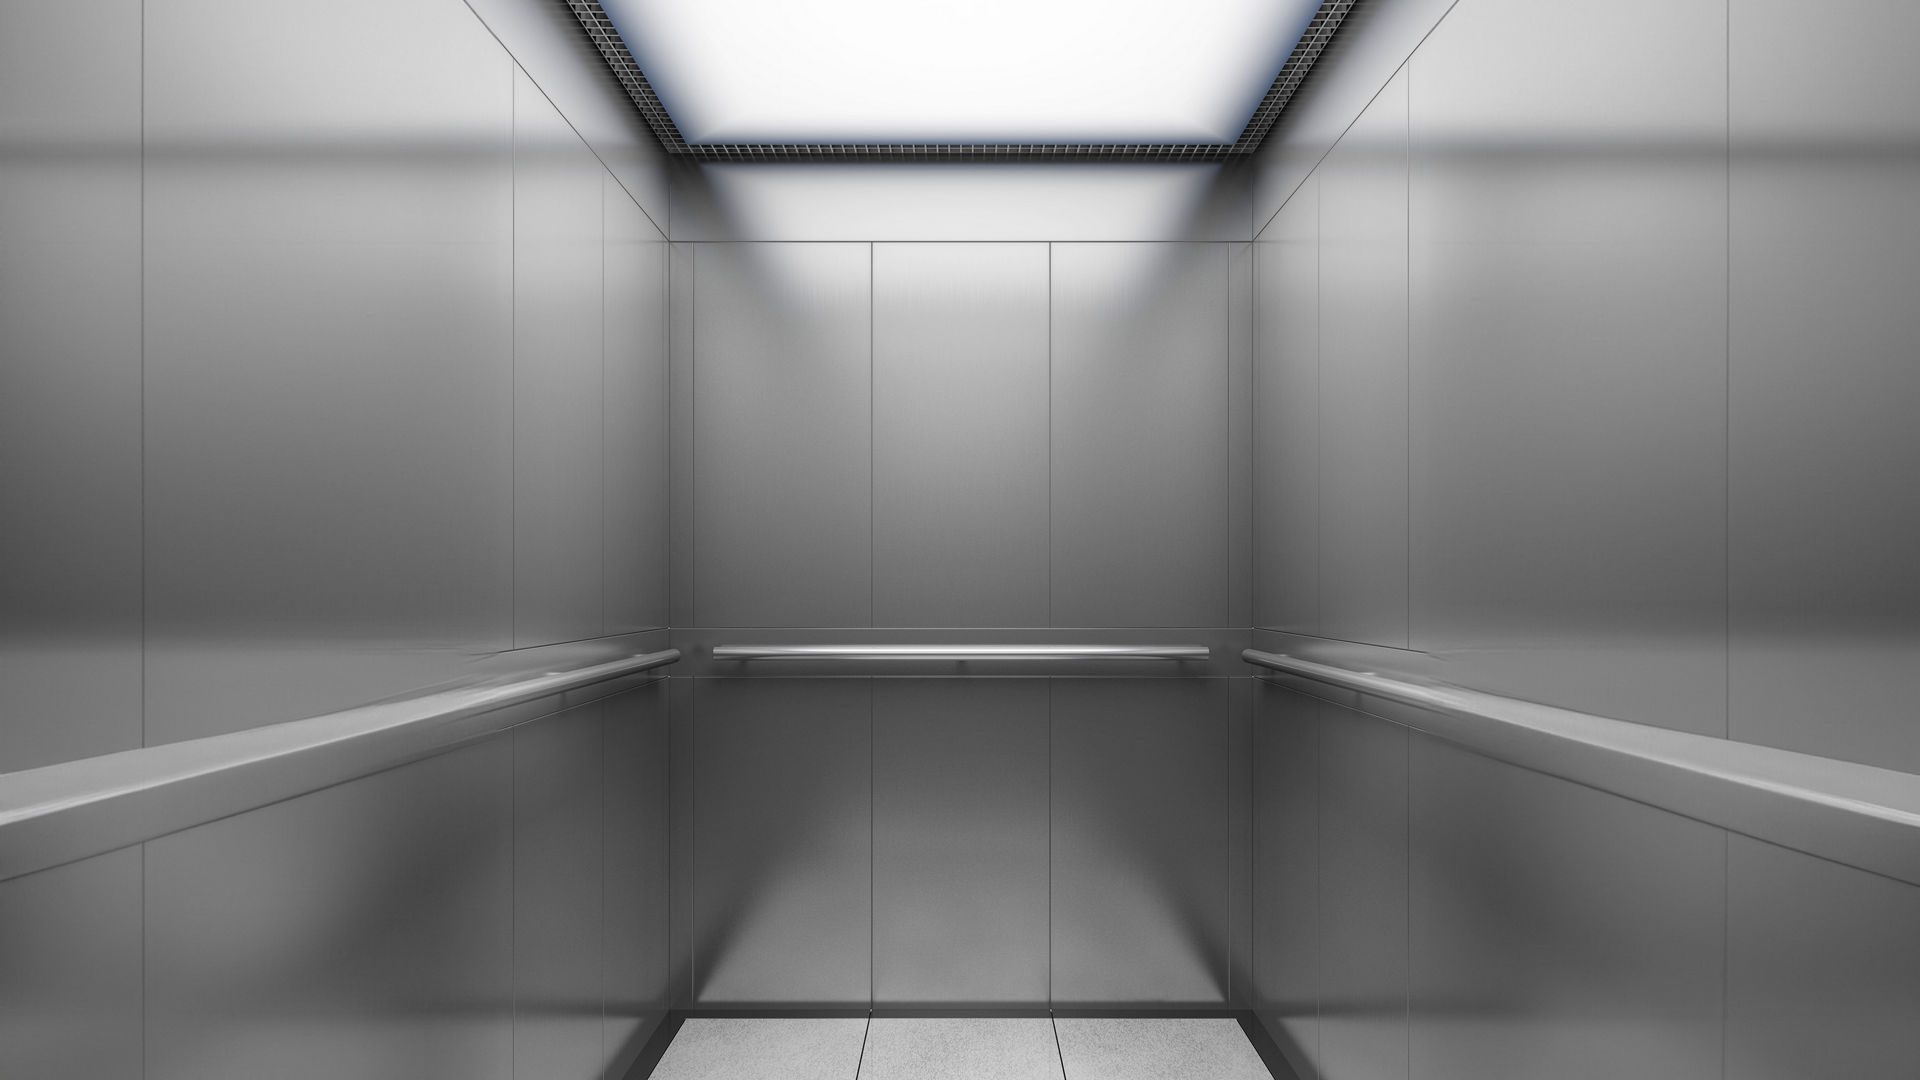 Elevator inside view